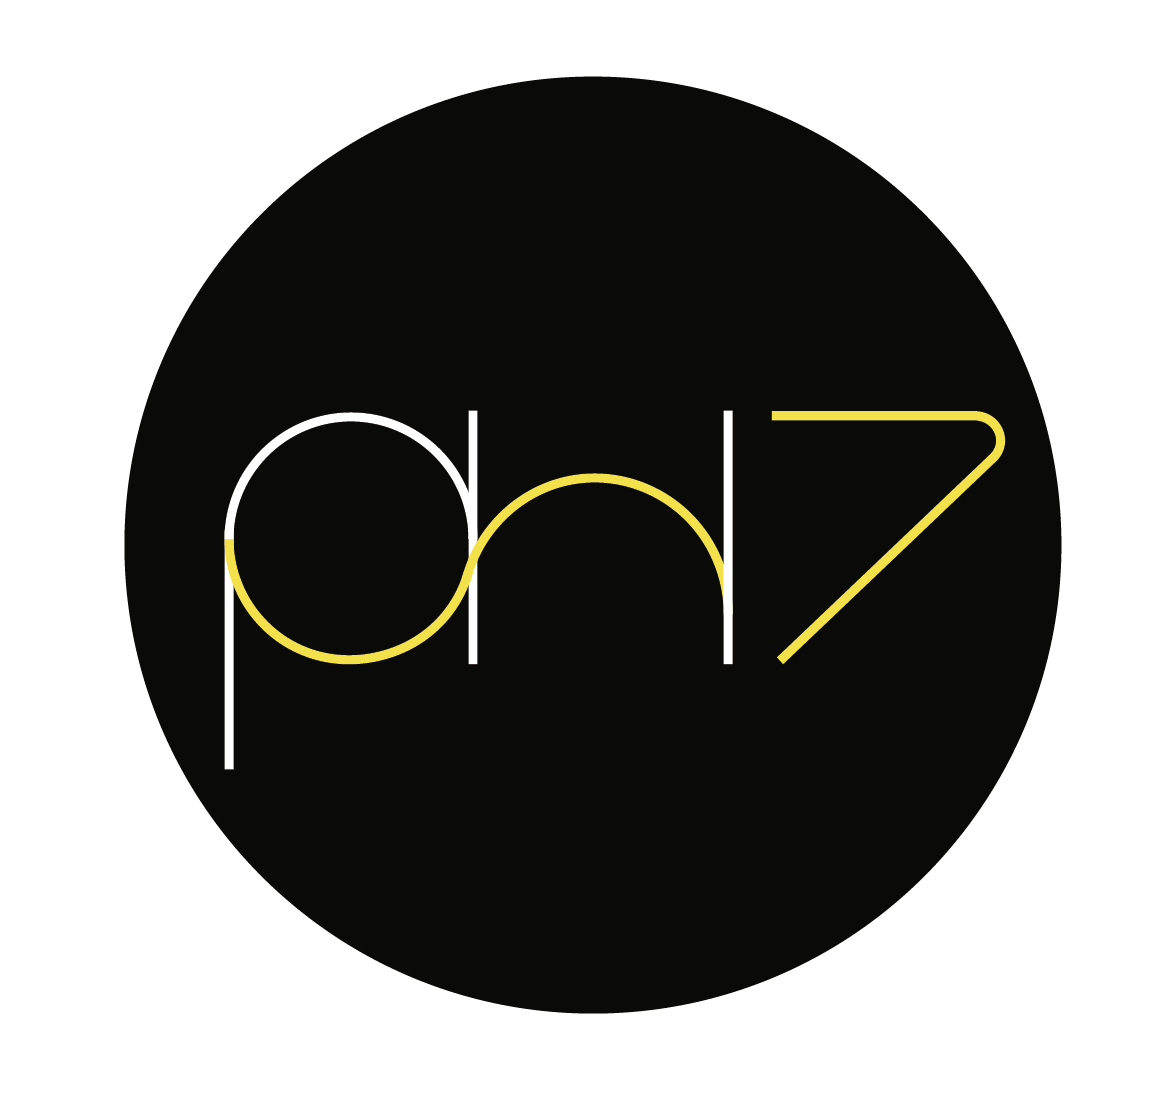 pH7 Communications - 上海氢度七文化传播有限公司